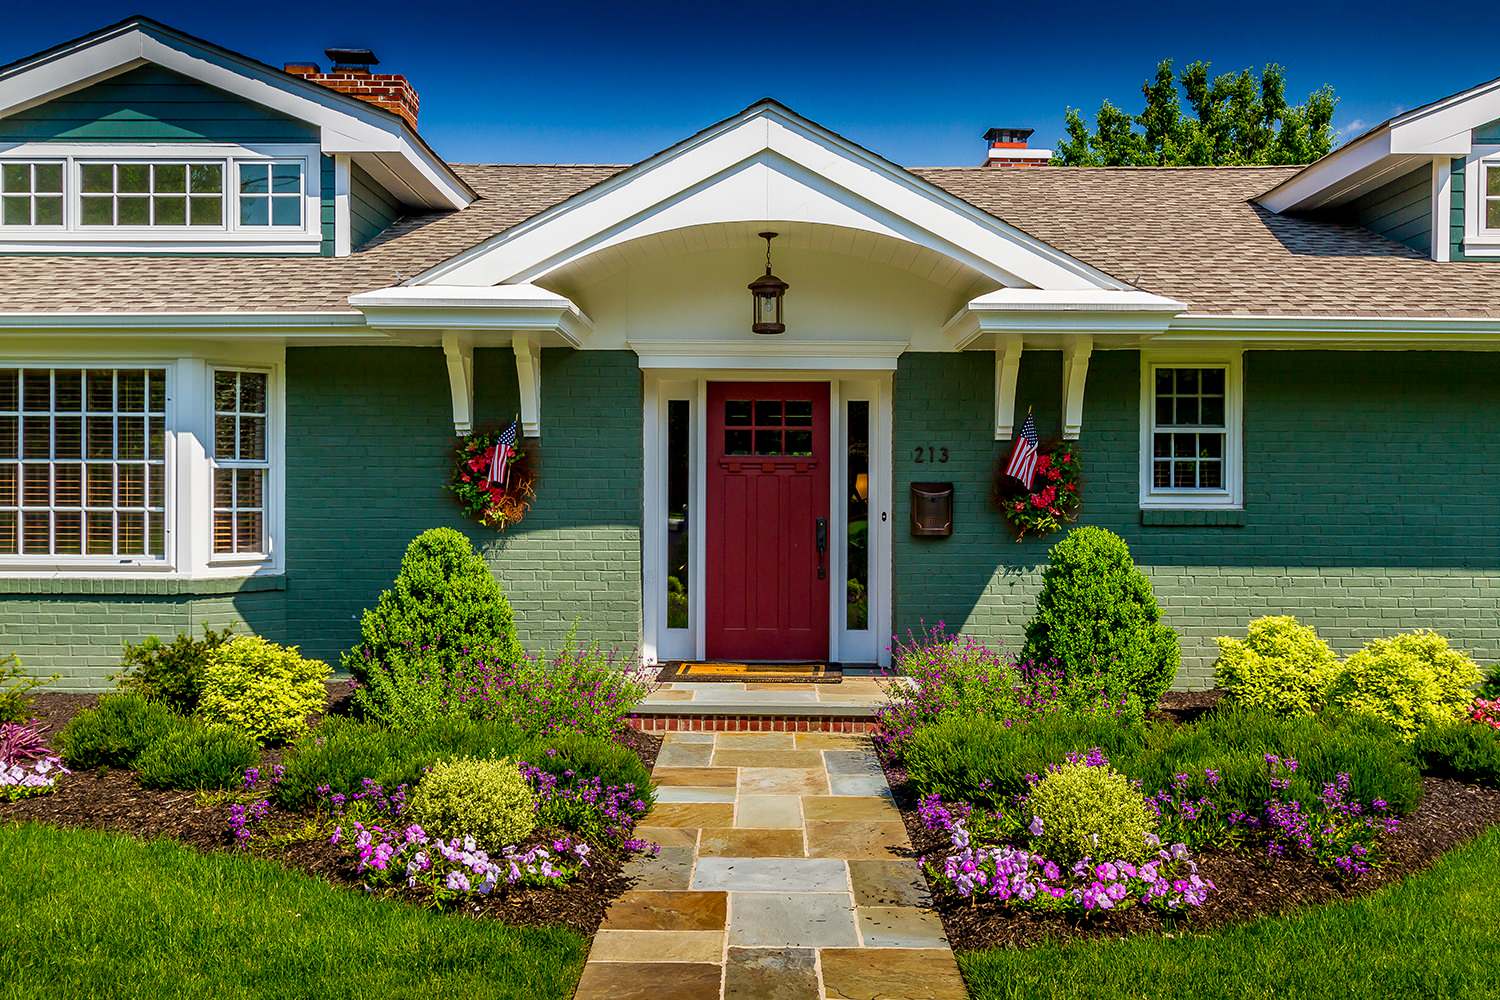 Our Favorite Green Exterior House Colors - brick&batten